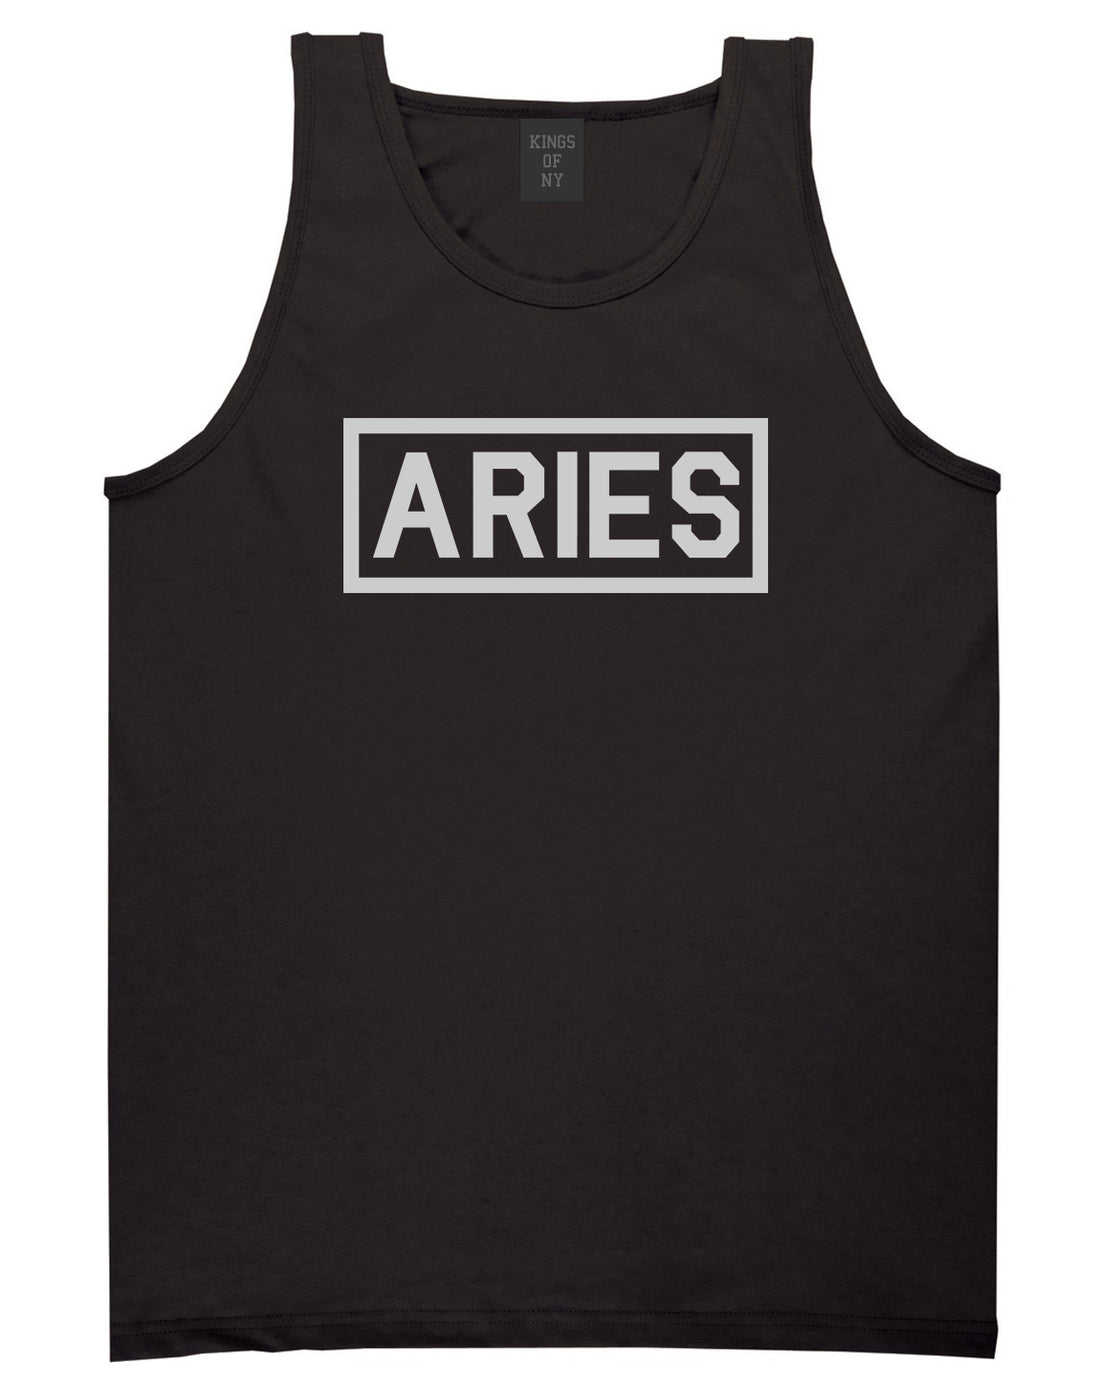 Aries Horoscope Sign Mens Black Tank Top Shirt by KINGS OF NY